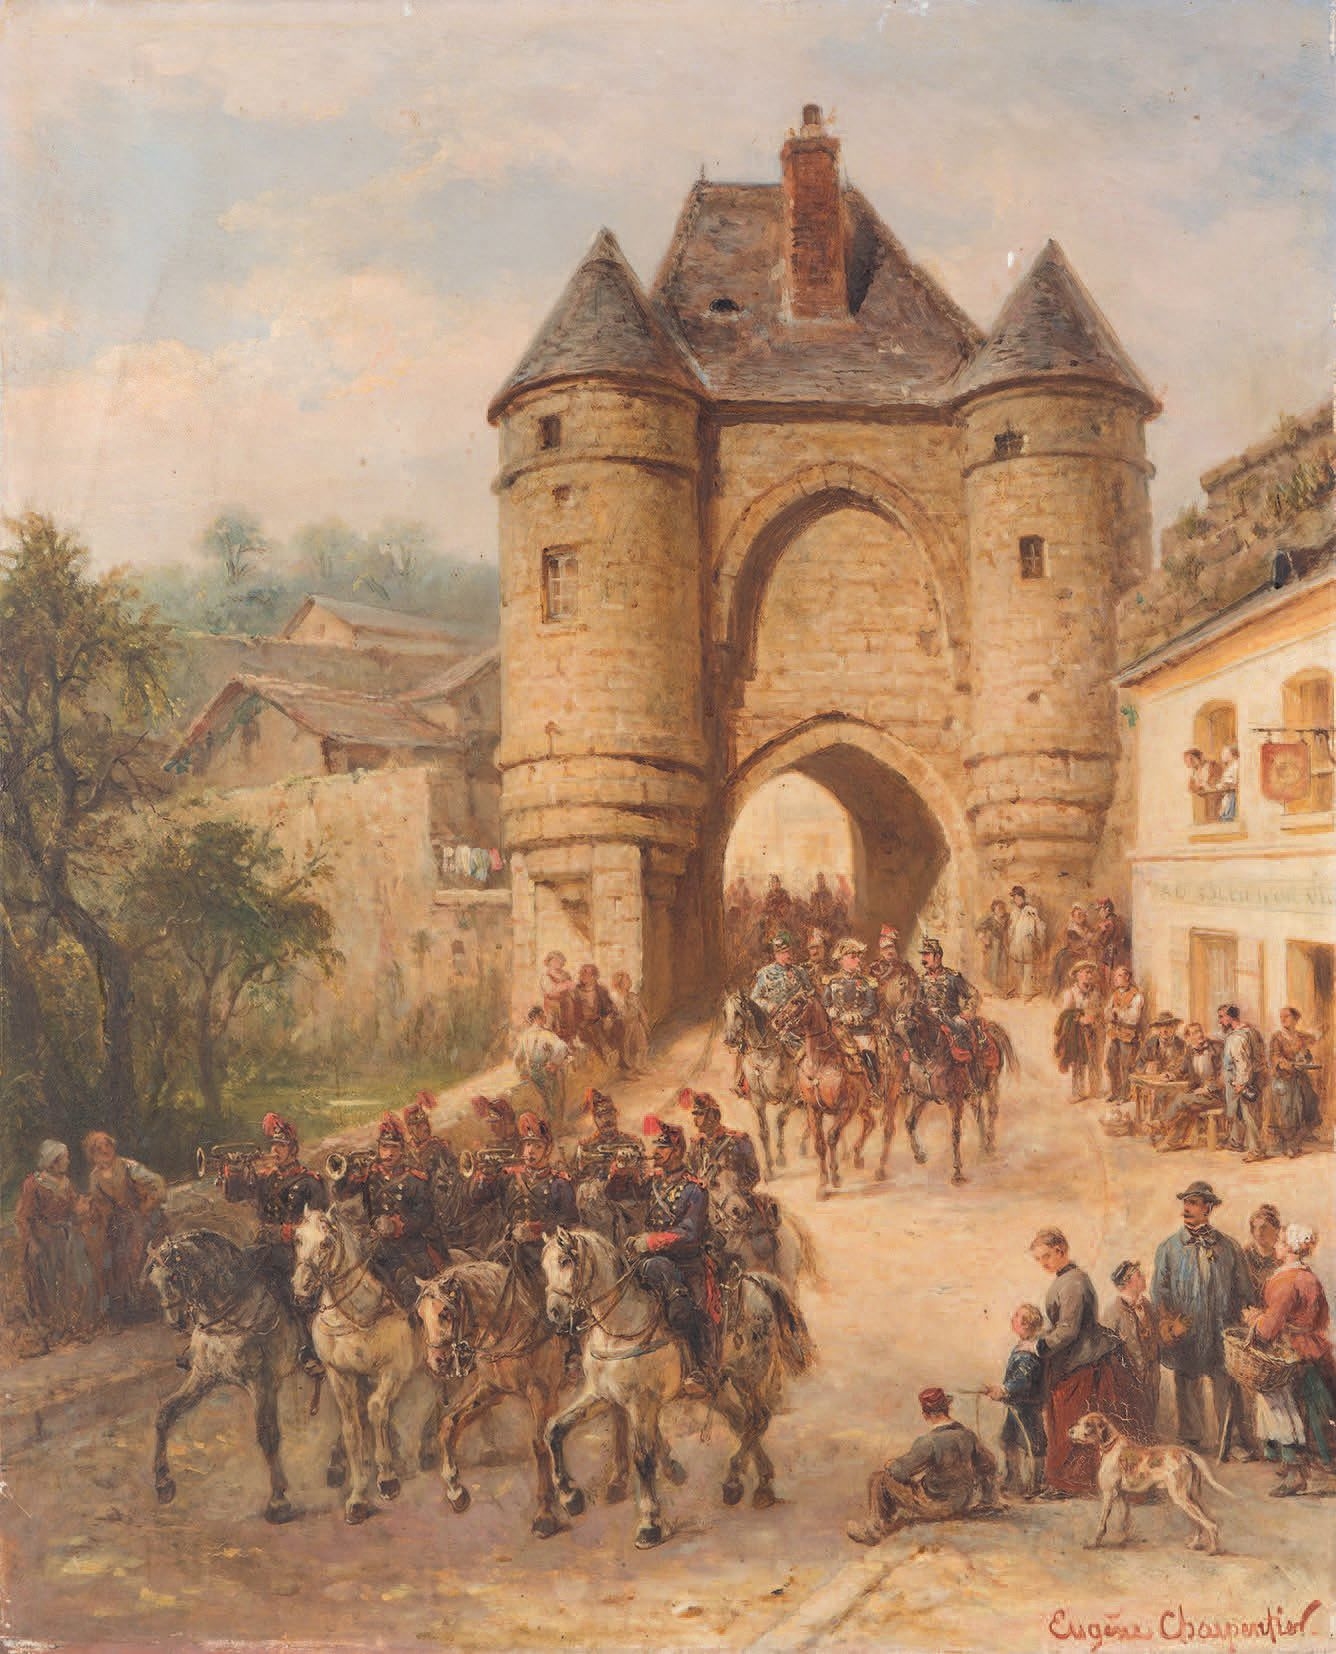 Eugène Louis Charpentier, Return from the fields